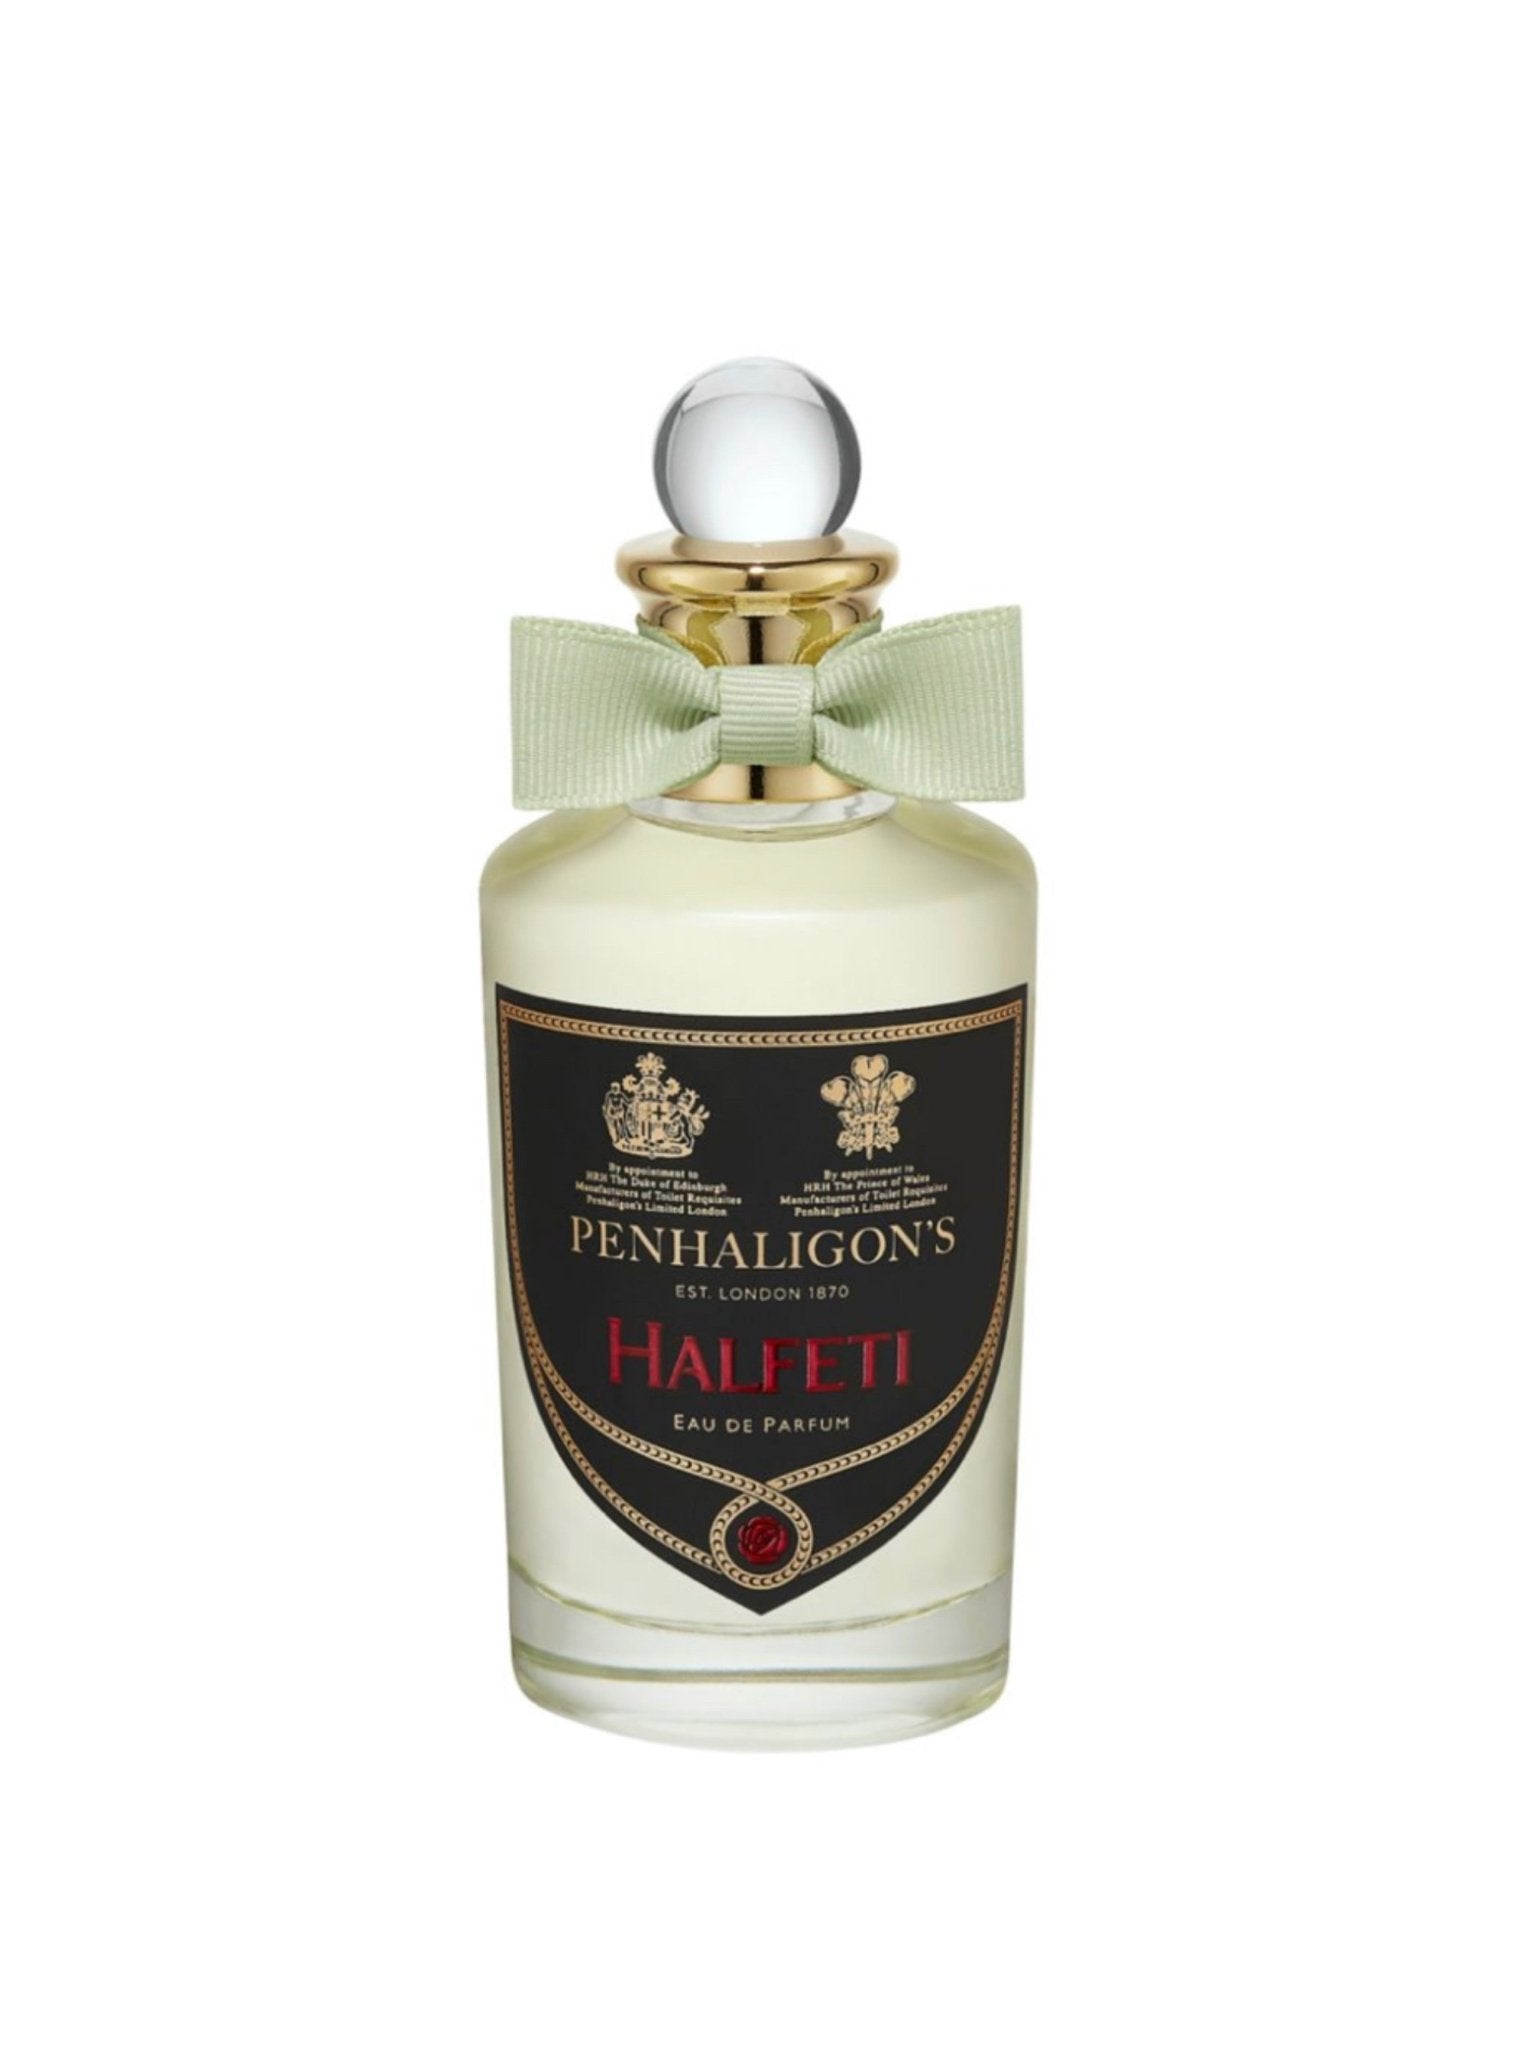 Penhaligon's Halfeti Perfume | Penhaligon's Halfeti | Fragrance Samples|Perfume samples